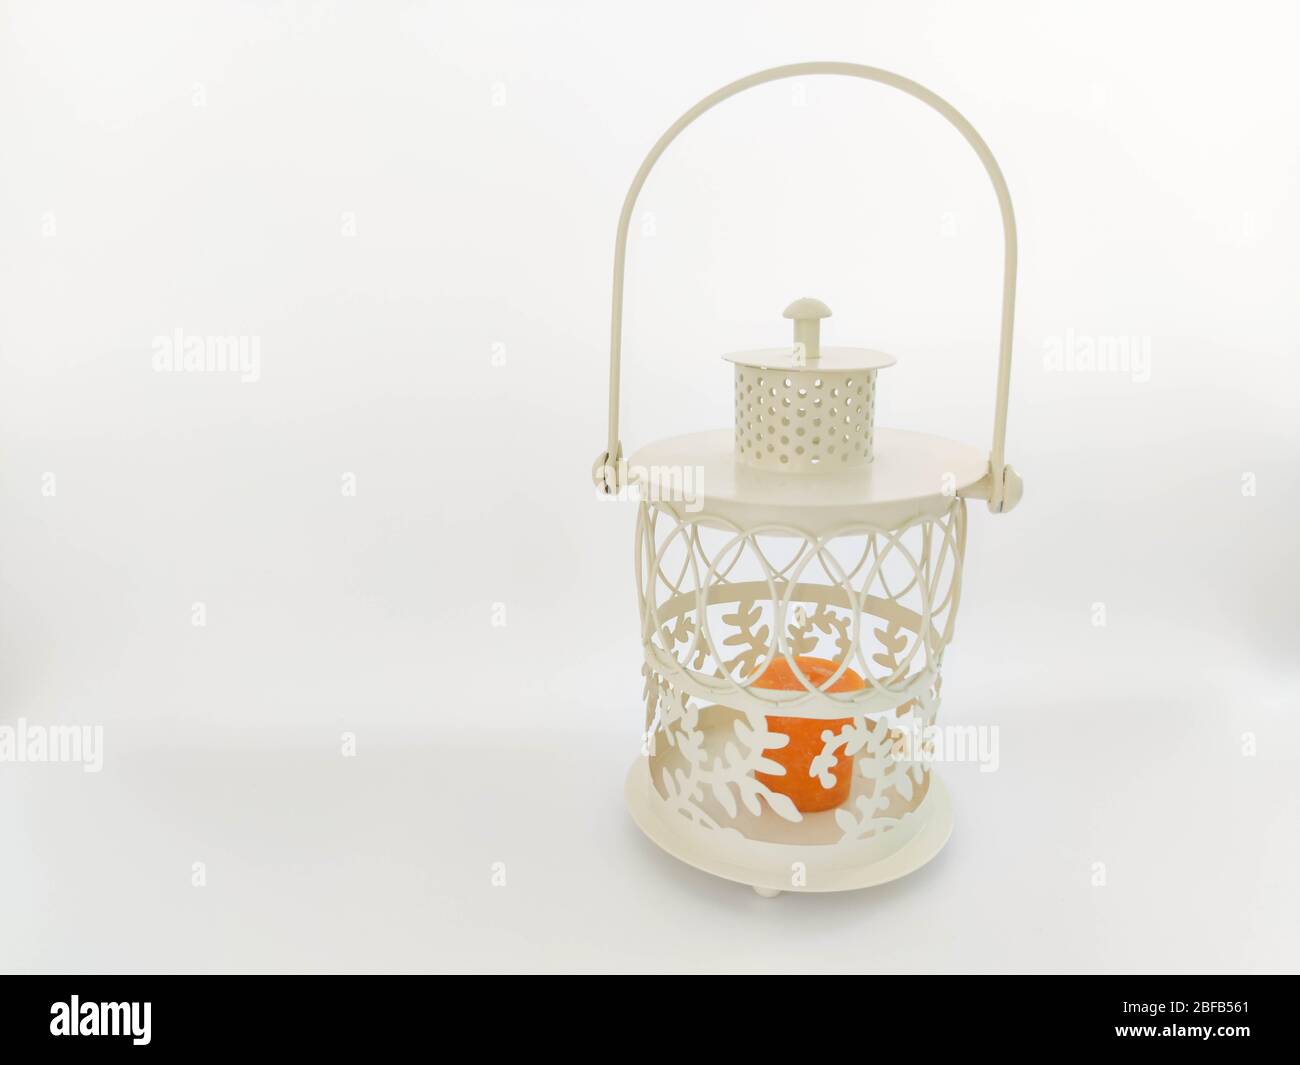 Vintage lantern with an orange candle on the white backdrop. Concept - Ramadan kareem holiday celebration. Royalty Free Stock photo Stock Photo